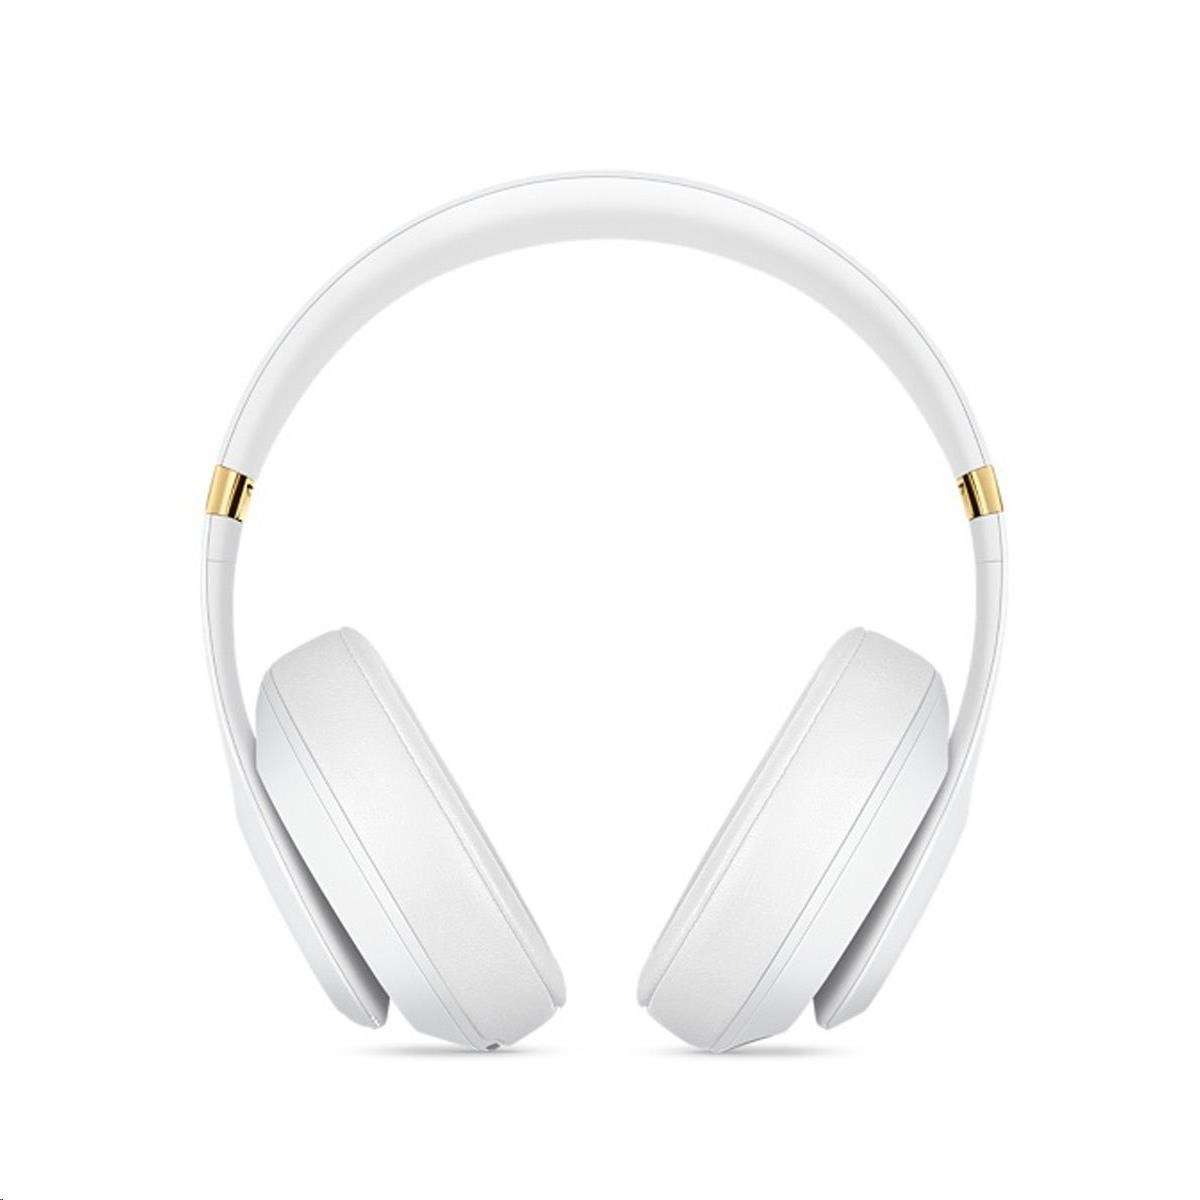 Beats Studio3 Wireless Over-Ear Headphones - White1 